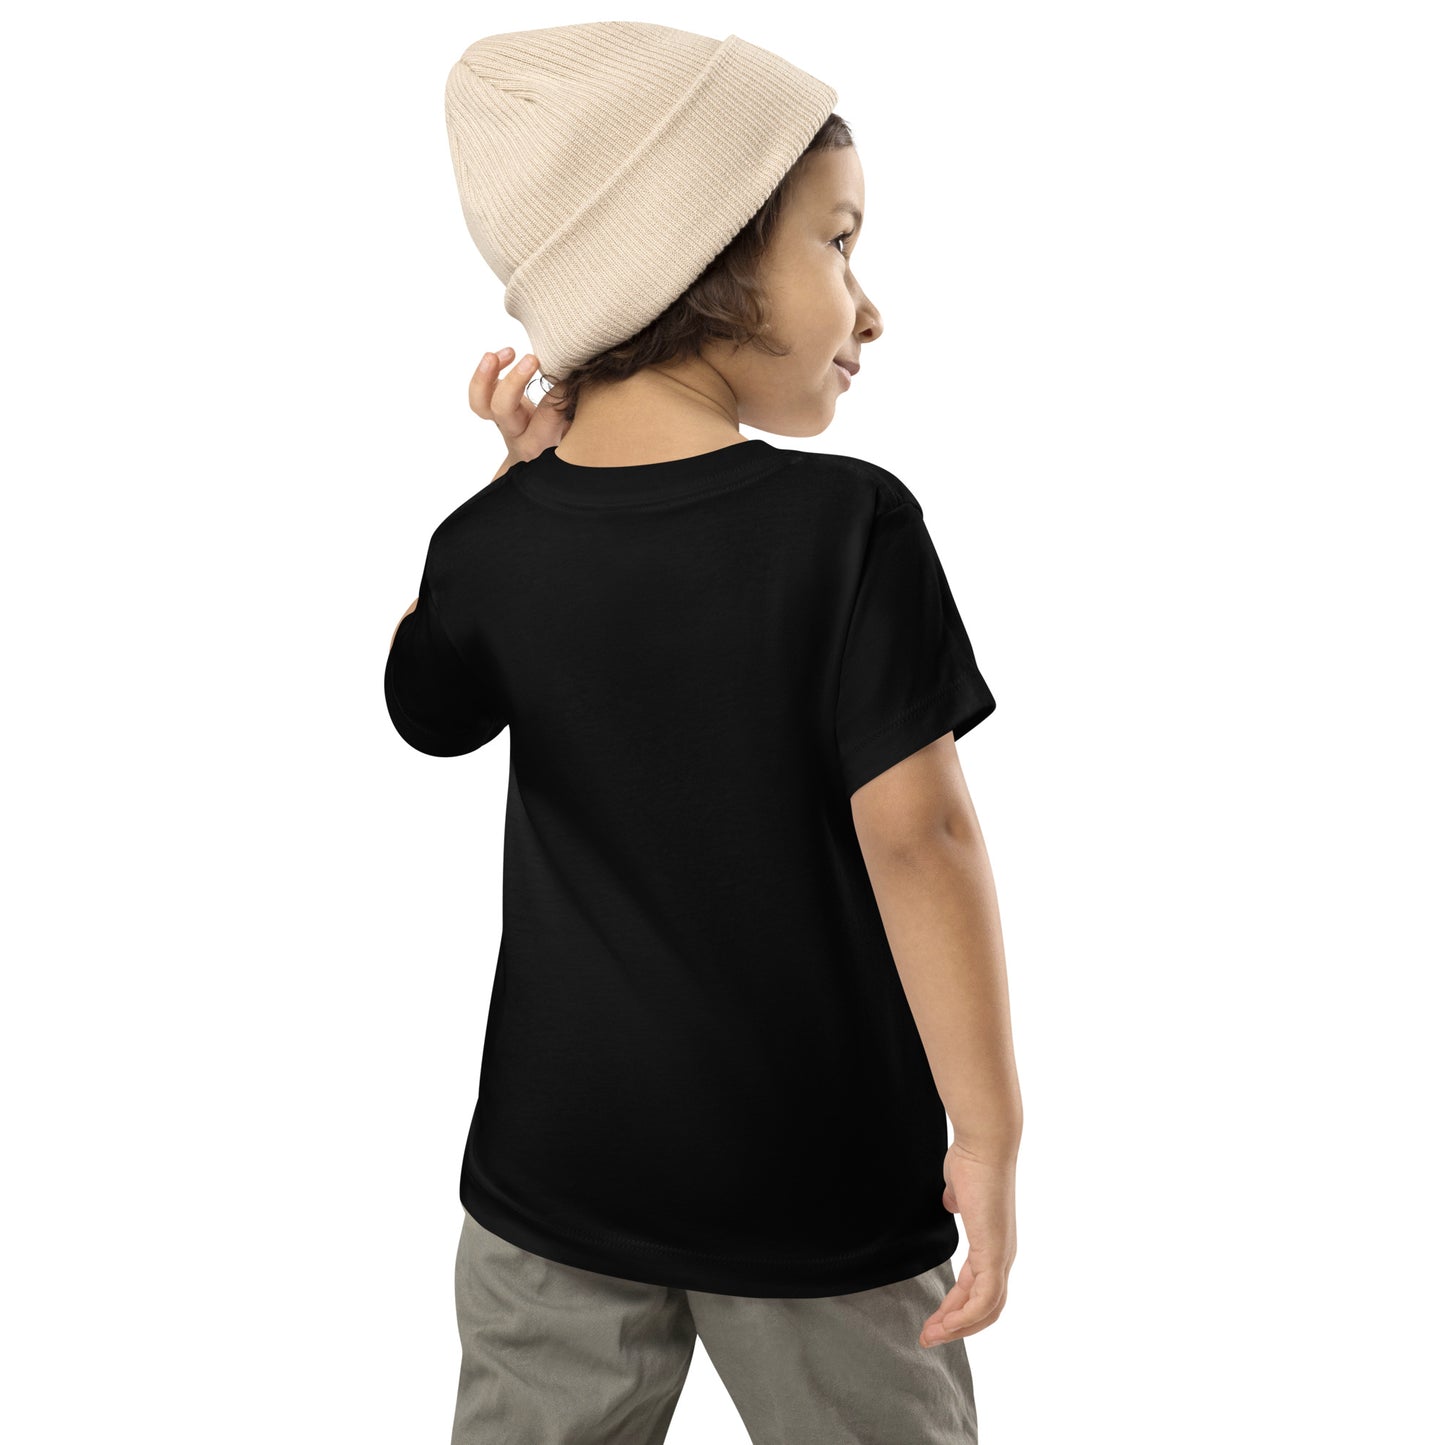 Premium Cotton Kids T-shirt